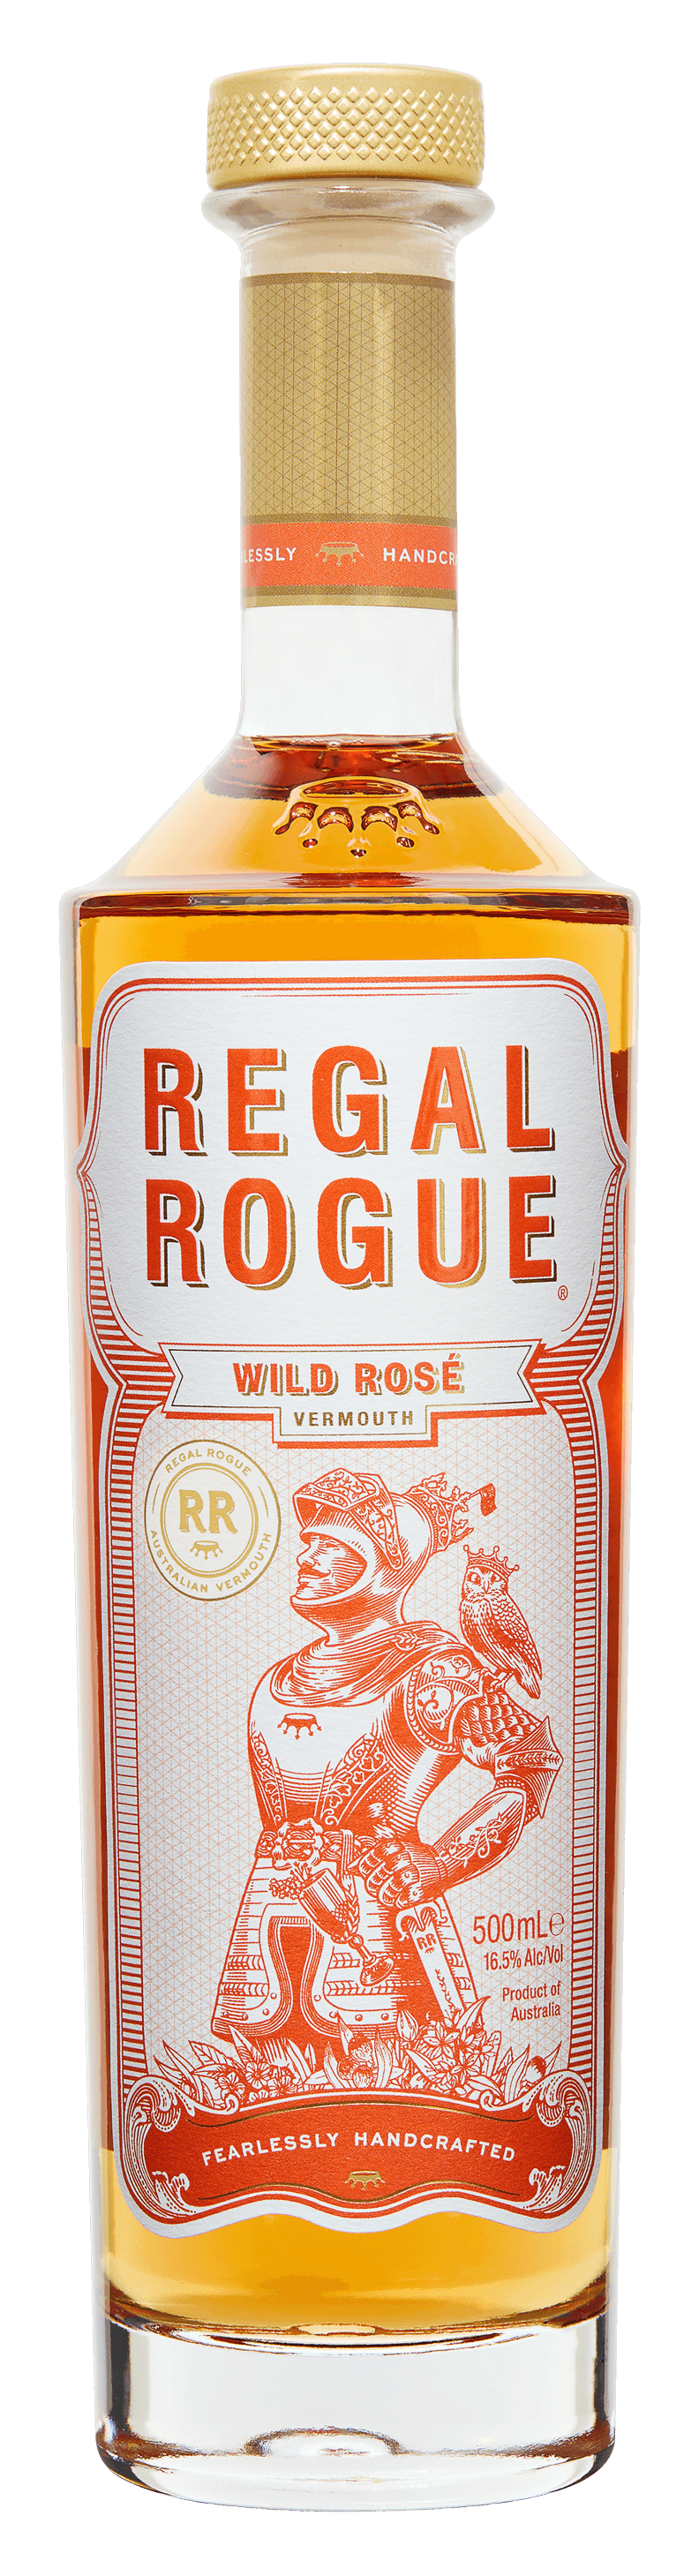 Regal Rogue Vermouth Wild Rose 500ml